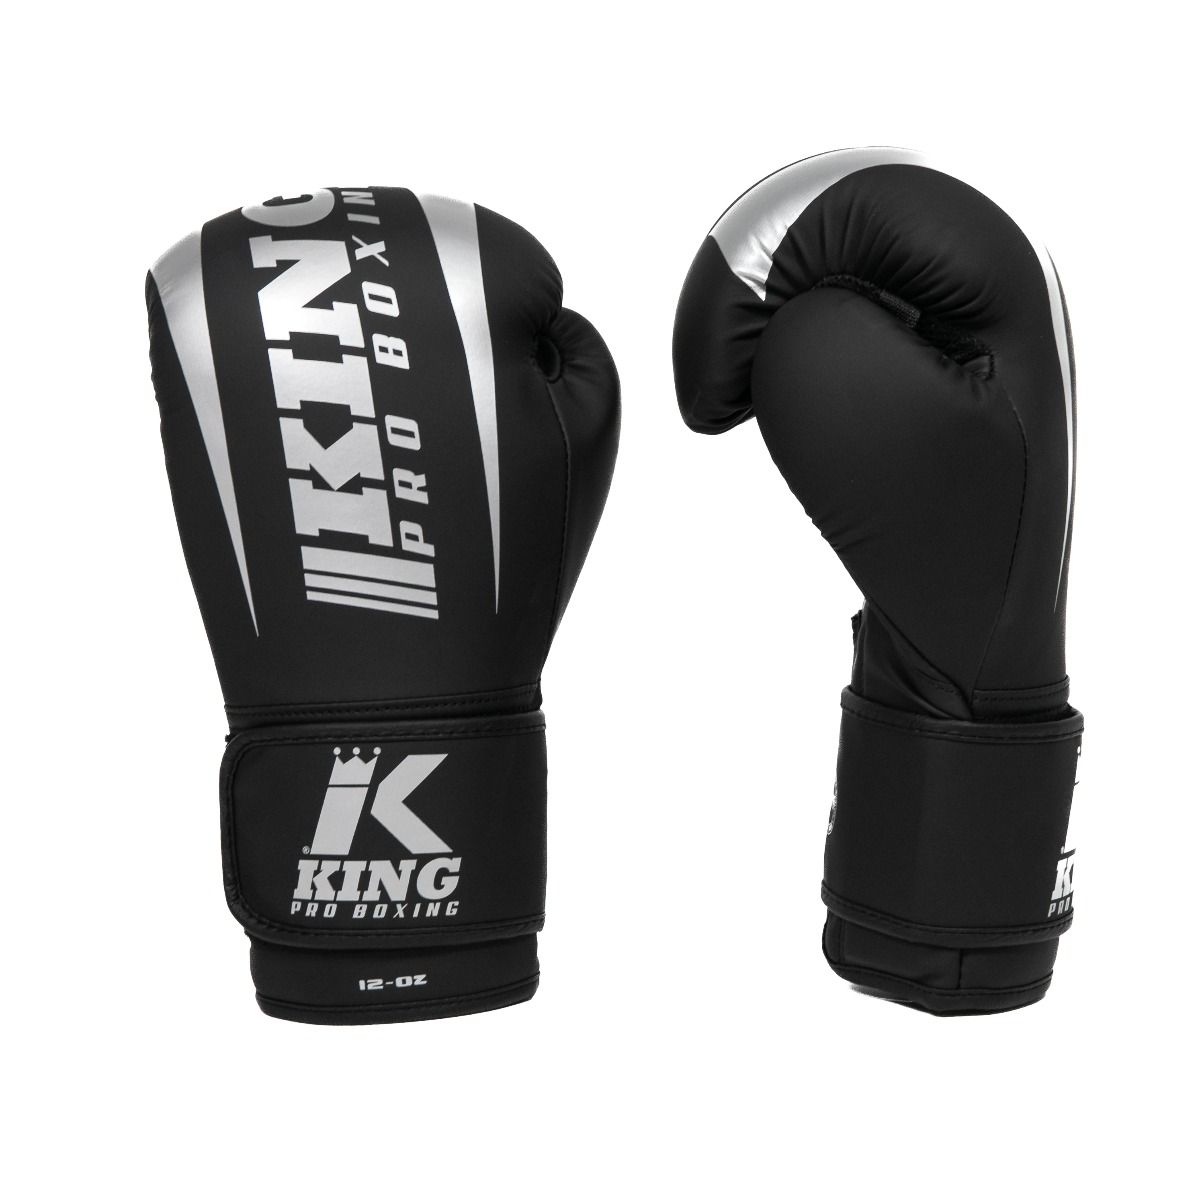 King Pro Boxing - BOKSHANDSCHOENEN - REVO 7 - Zwart - zilver - black - silver 